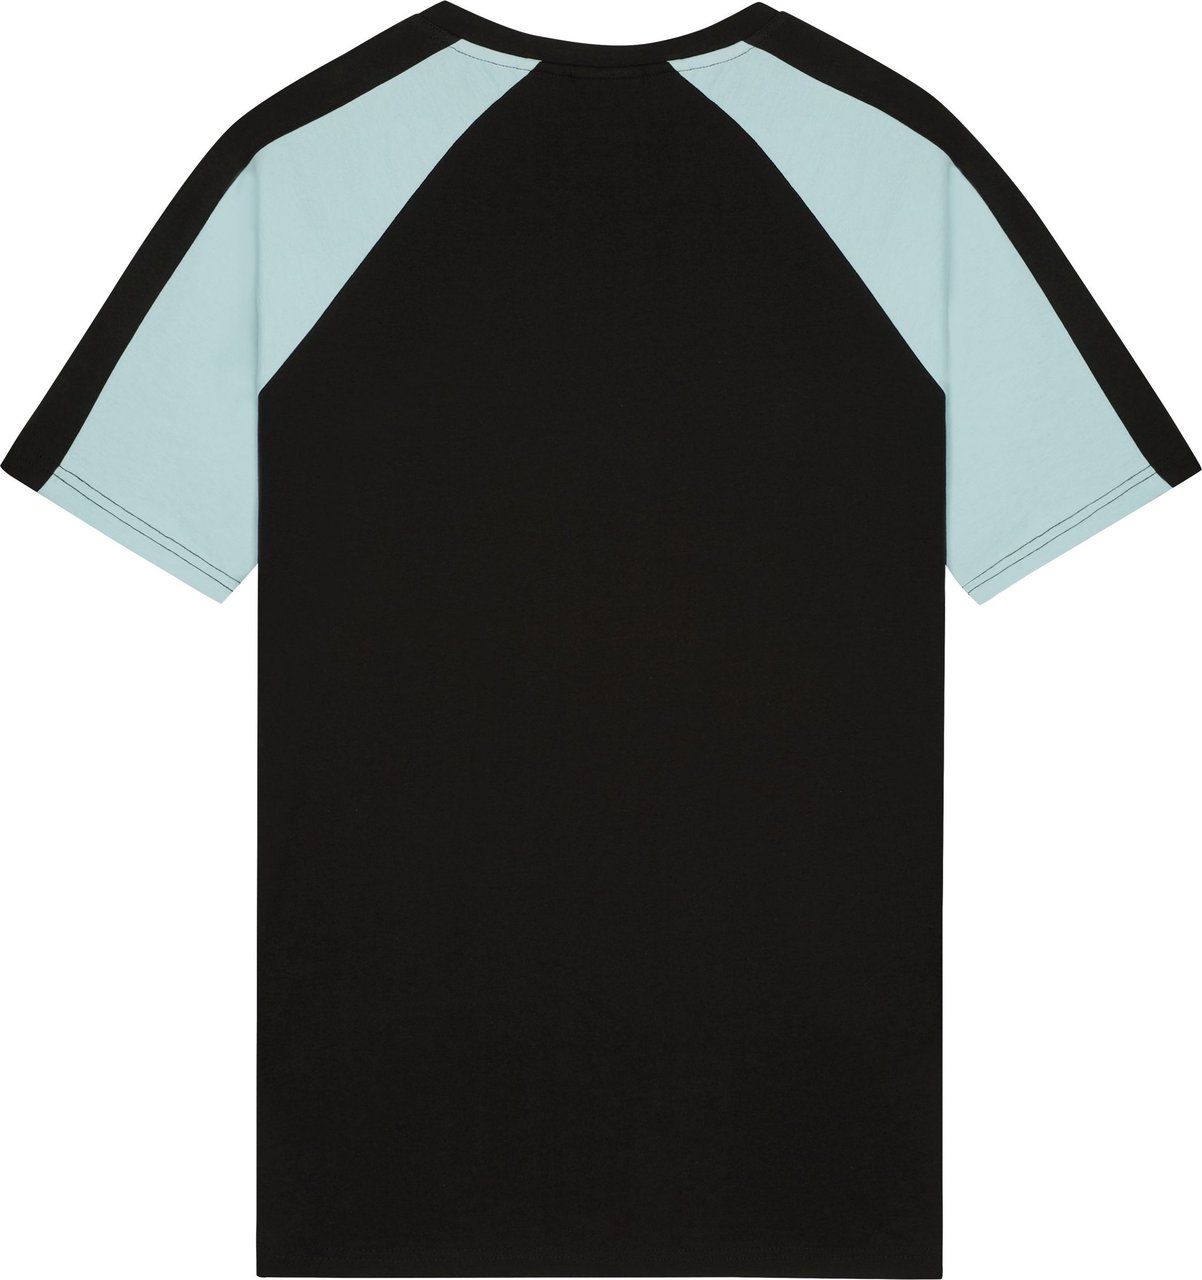 Malelions Sport Striker T-Shirt - Black Zwart